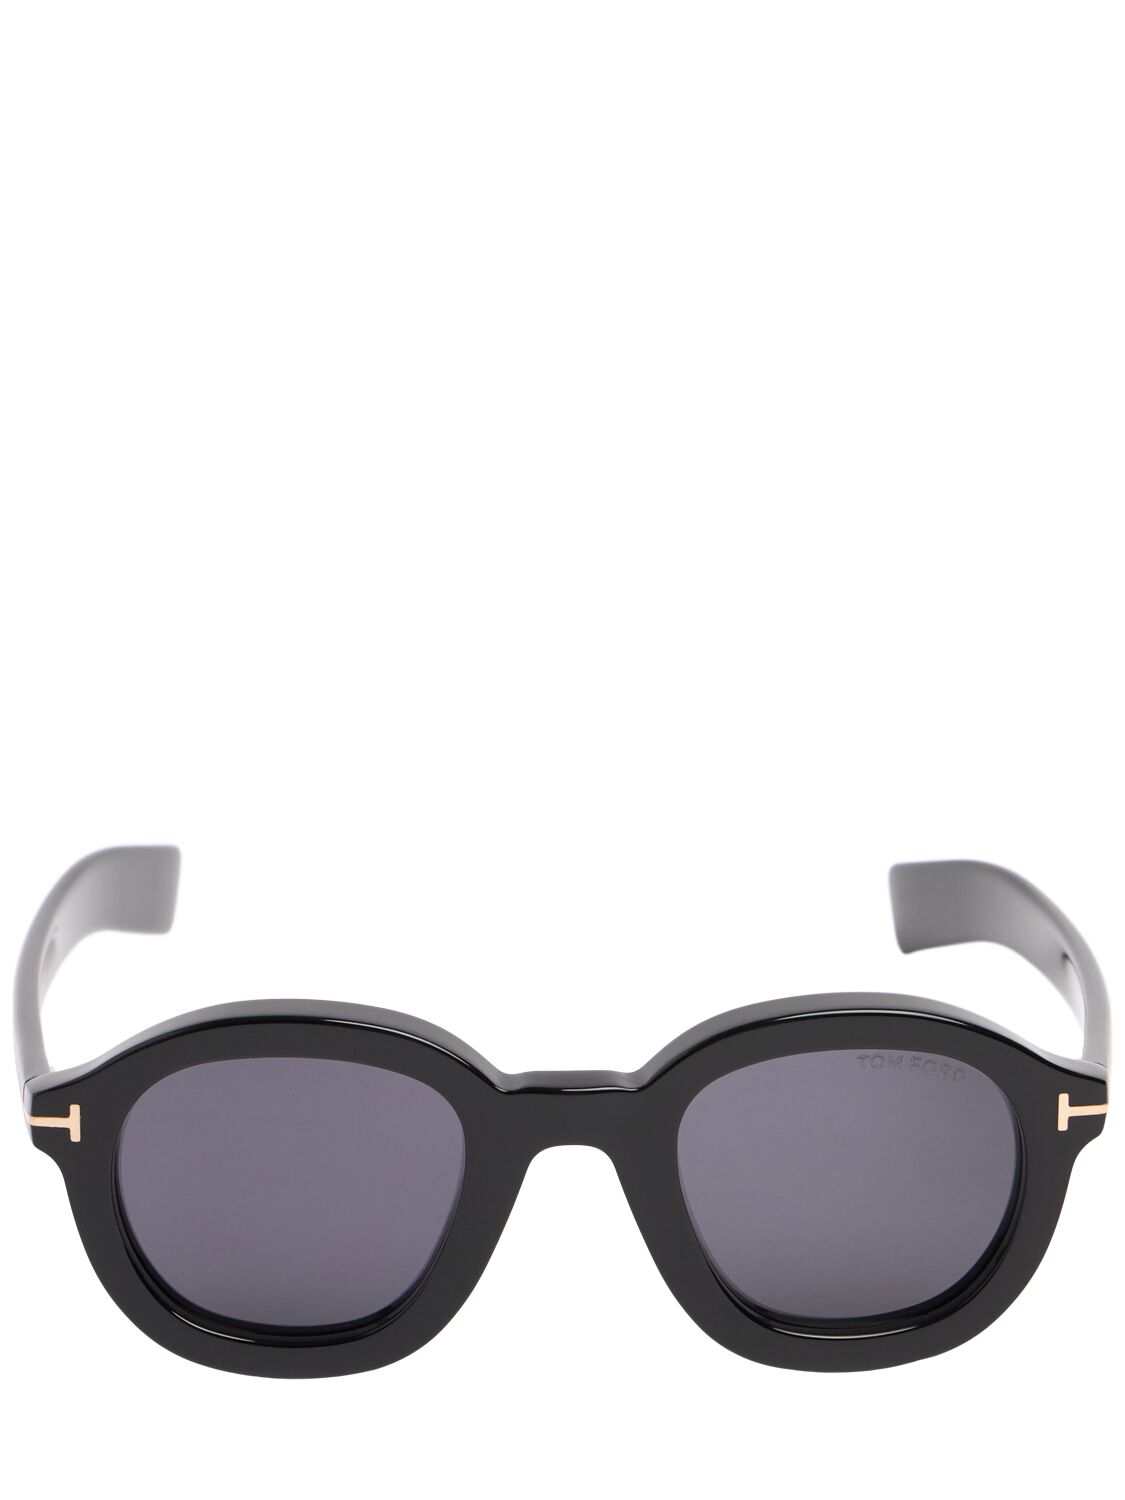 Tom Ford Raffa Acetate Sunglasses In Black